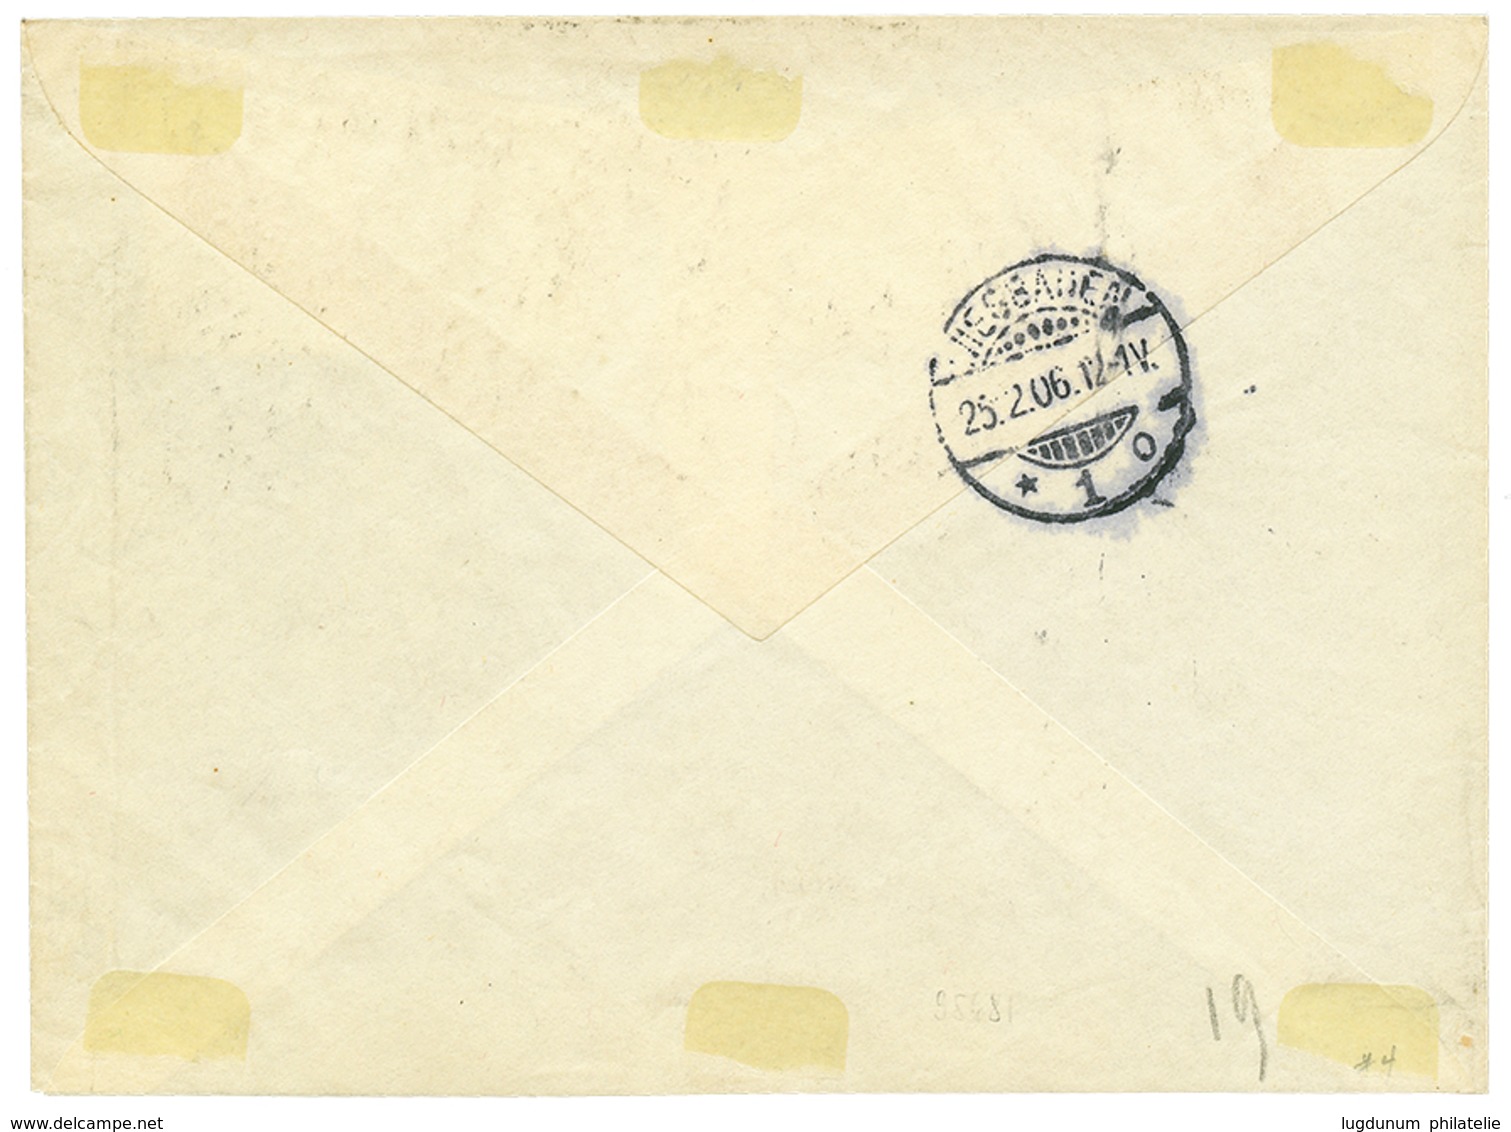 944 1906 50c Canc. CANEA On REGISTERED Envelope To WIESBADEN. Superb. - Levant Autrichien